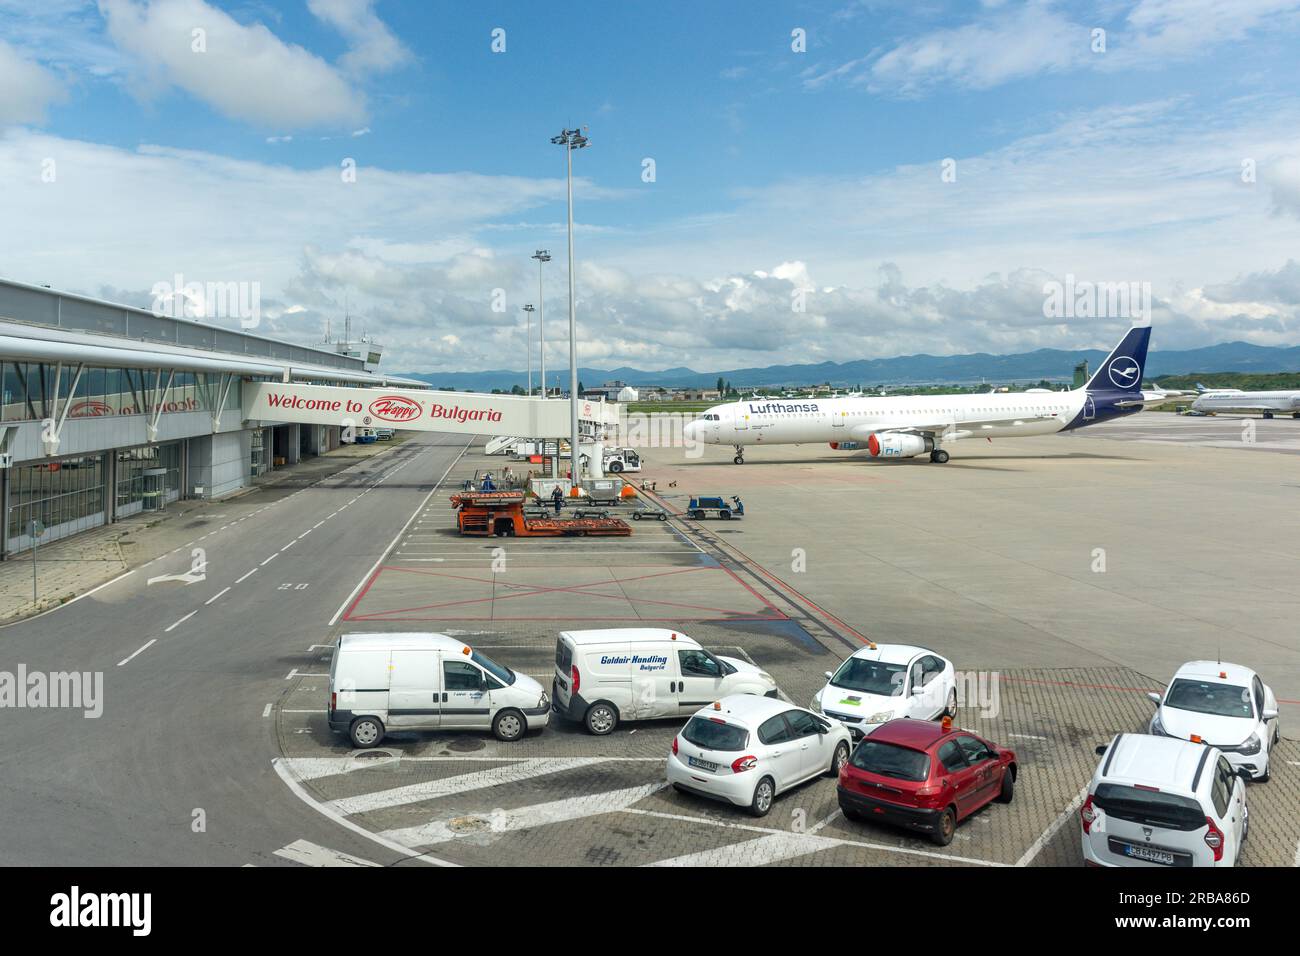 Sofia International Airport, Tsarigradsko shose Blvd, Sofia, Republic of Bulgaria Stock Photo